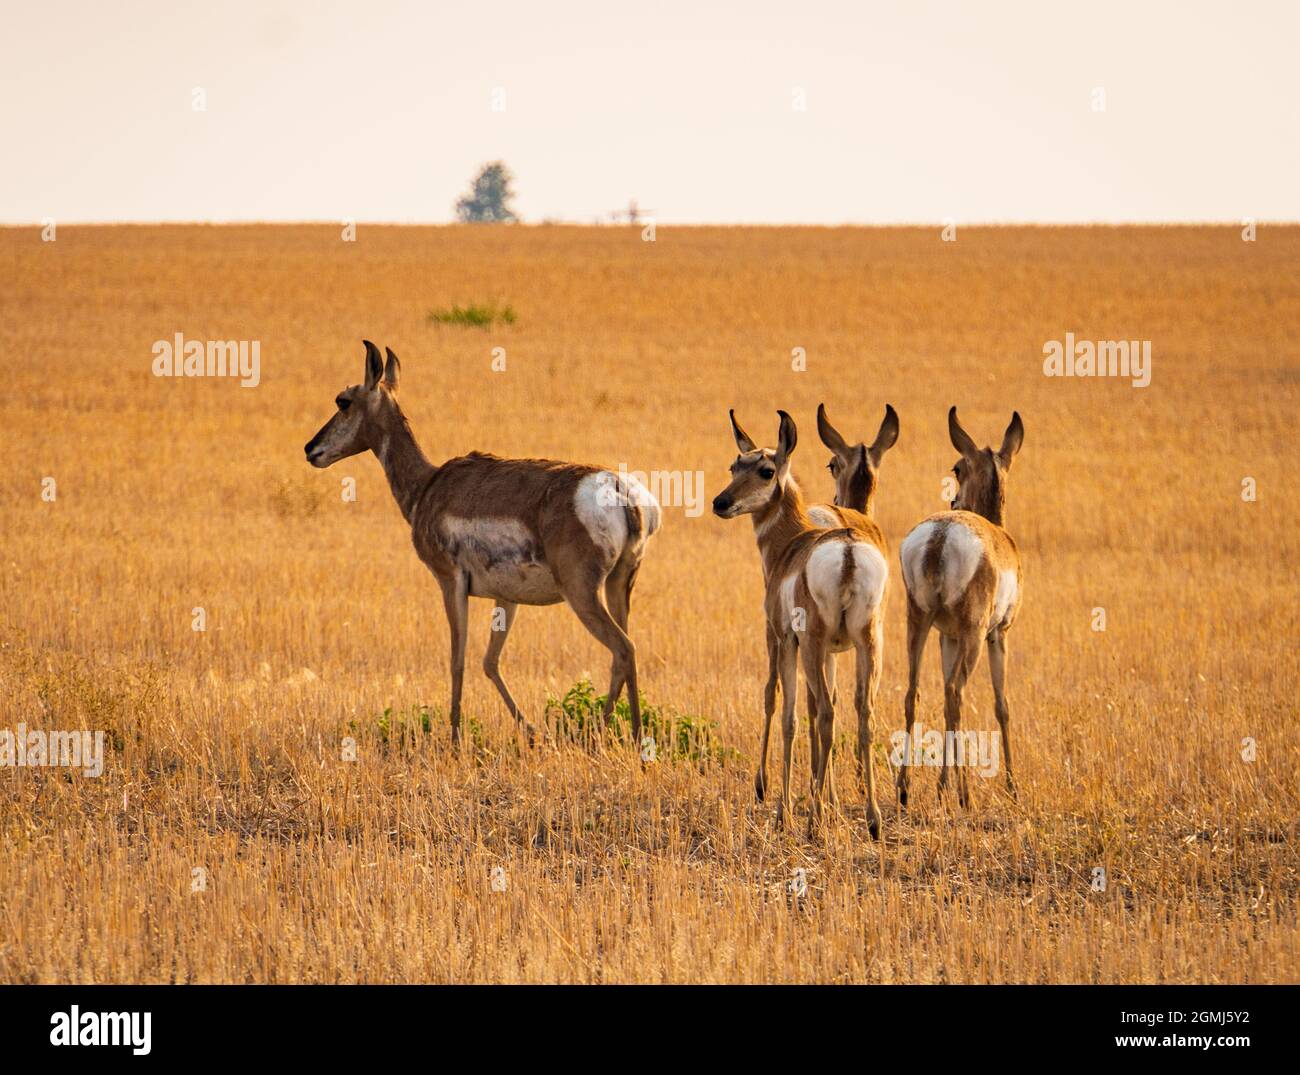 pronghorn, an antelope-like wild animal, on the grasslands of Montana Stock Photo